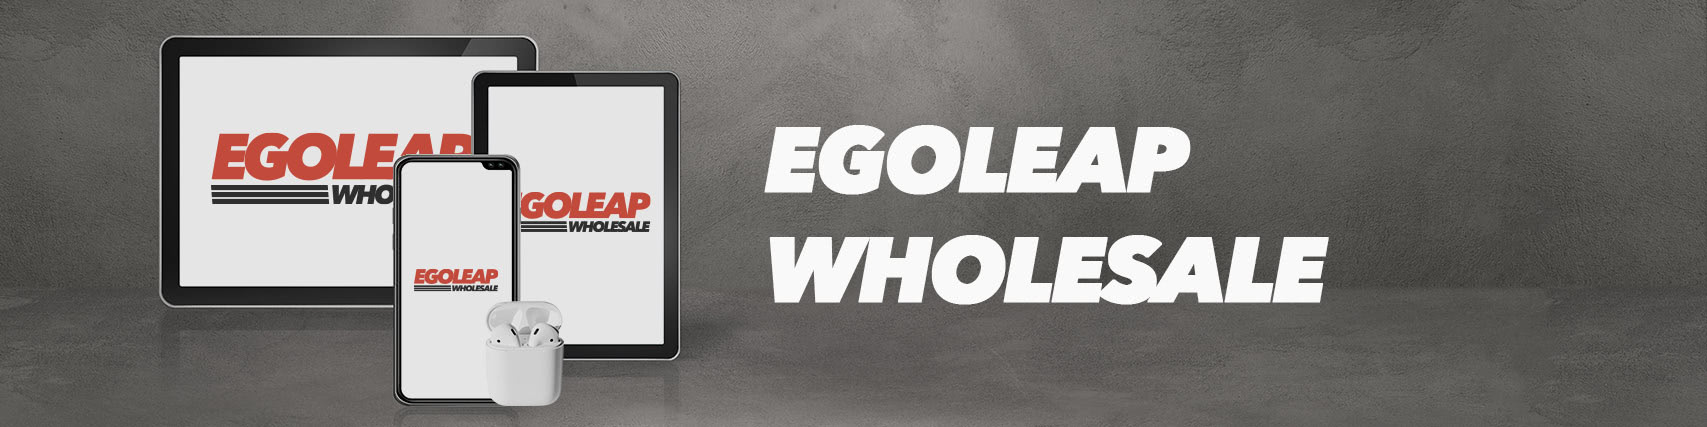 egoleap wholesale